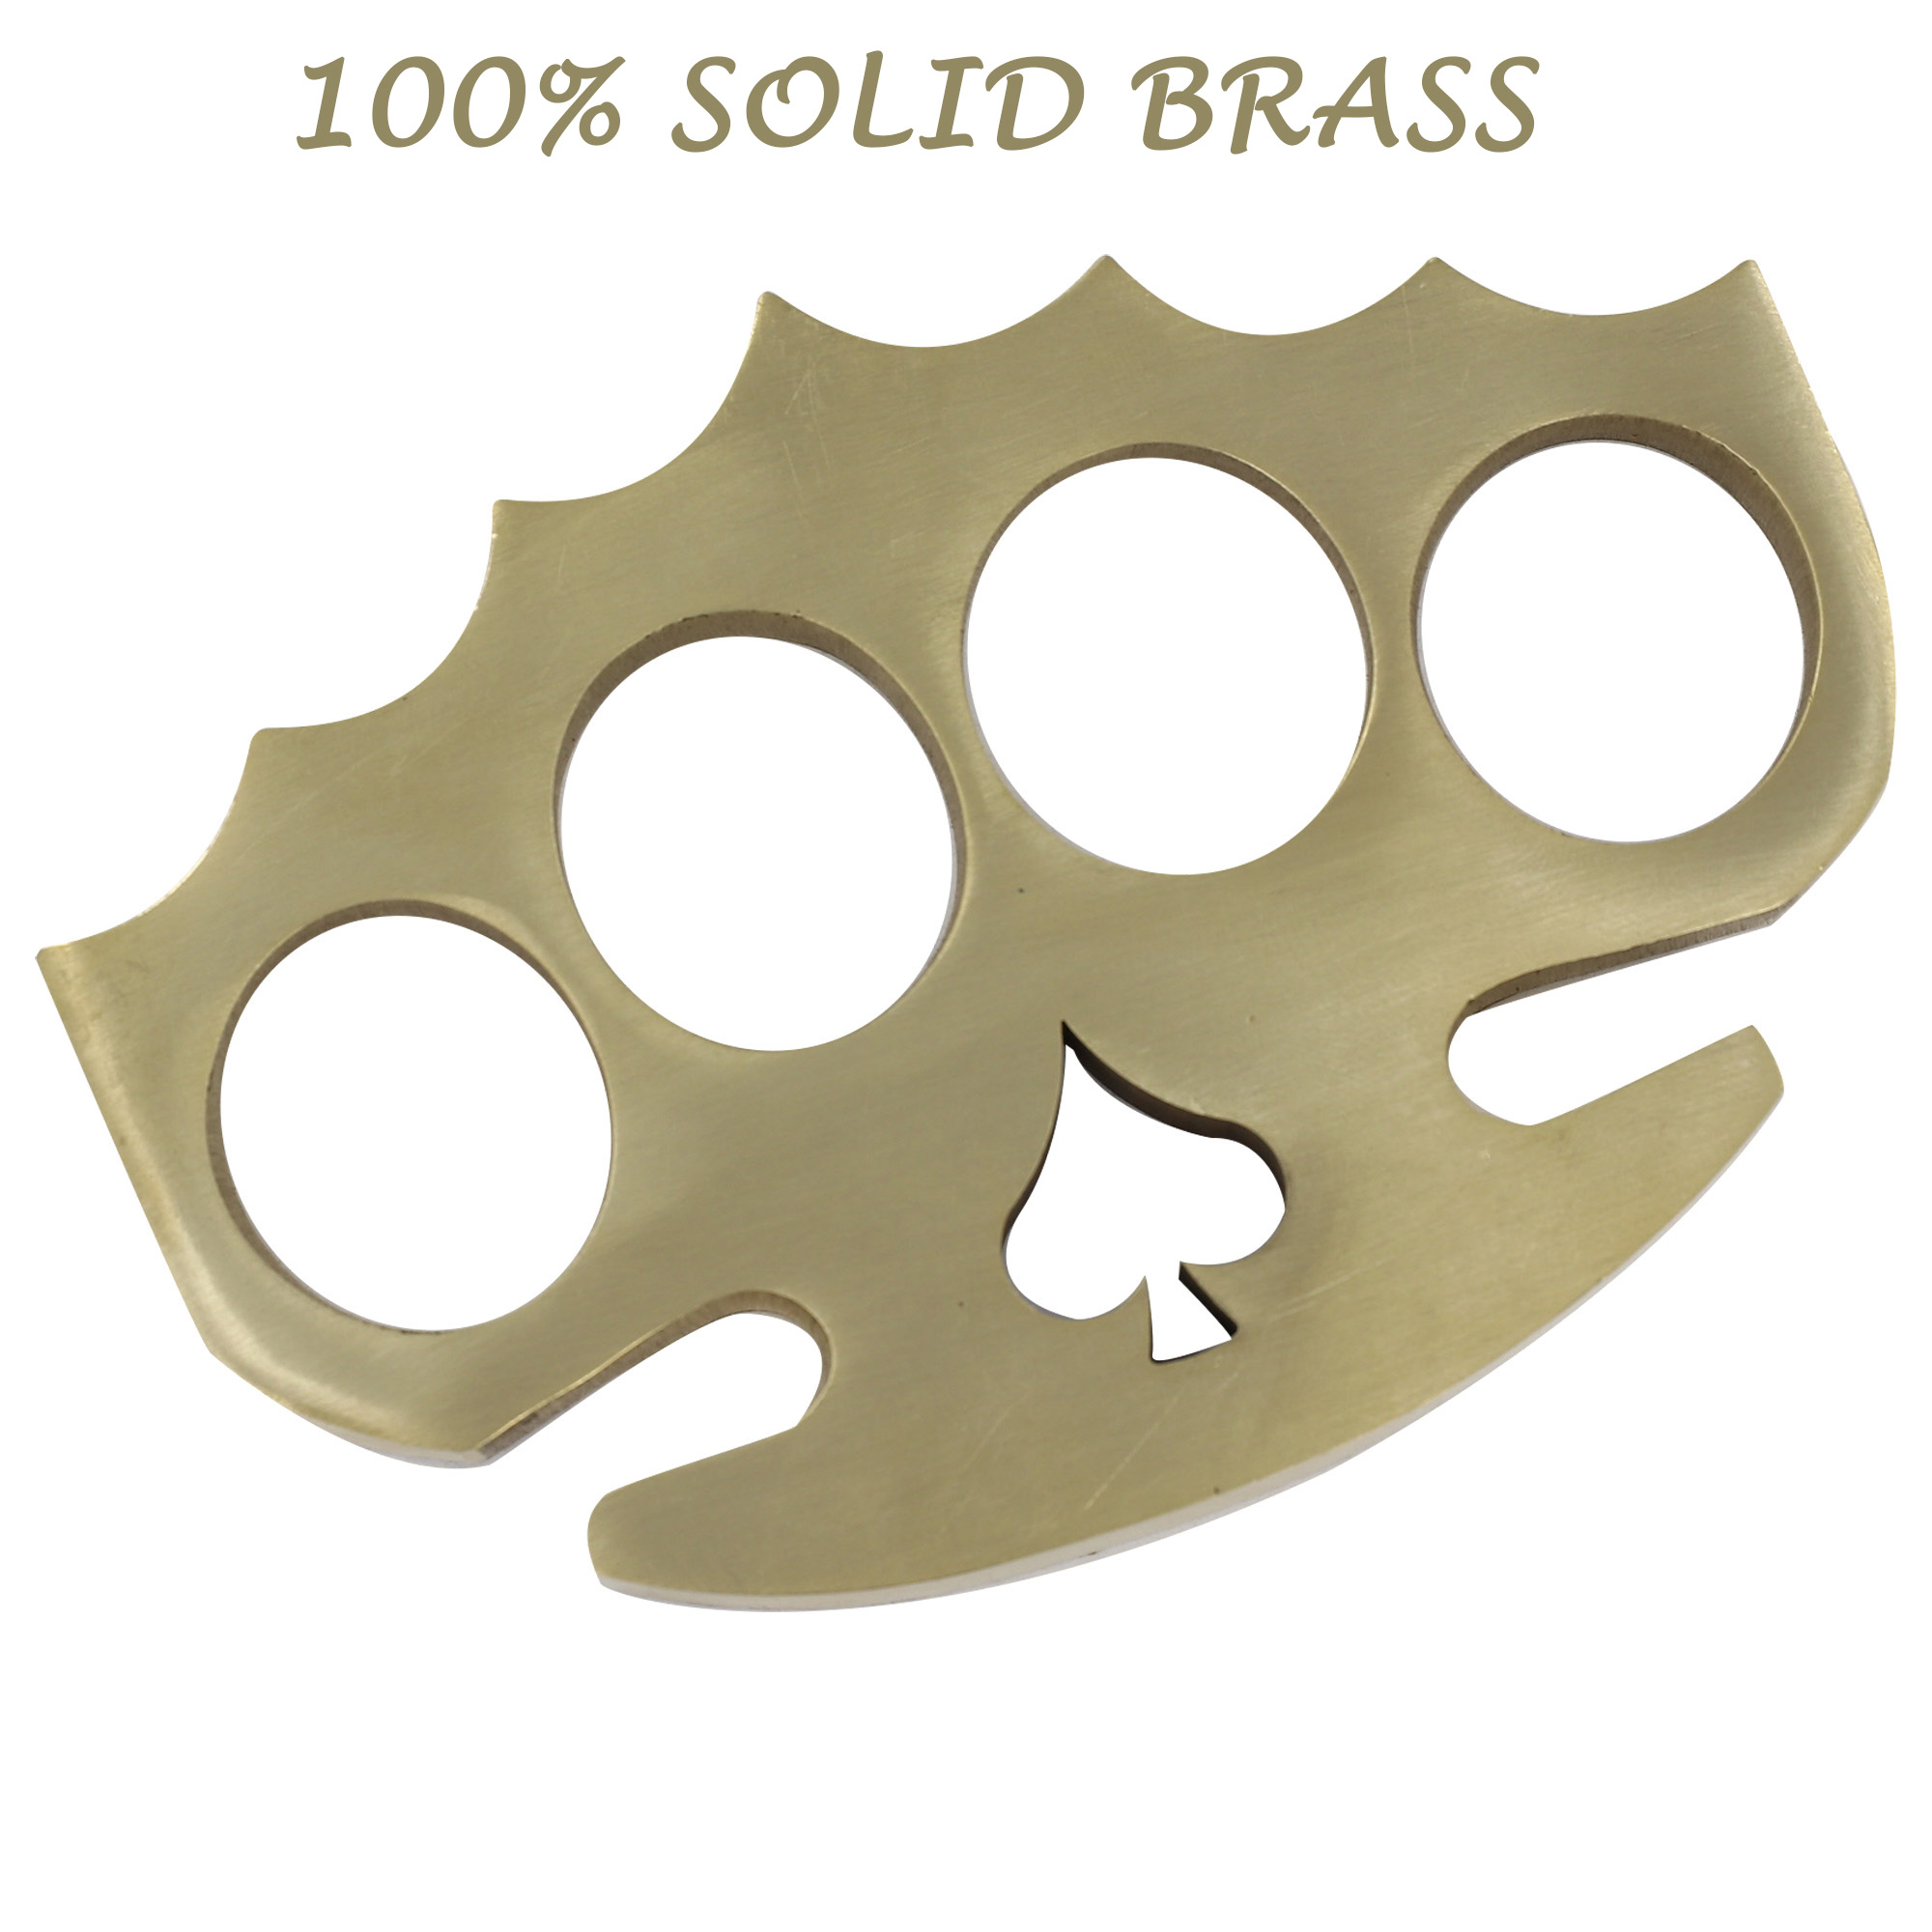 GAME Marathon 100% Pure Brass Knuckle Paper Weight Accessory